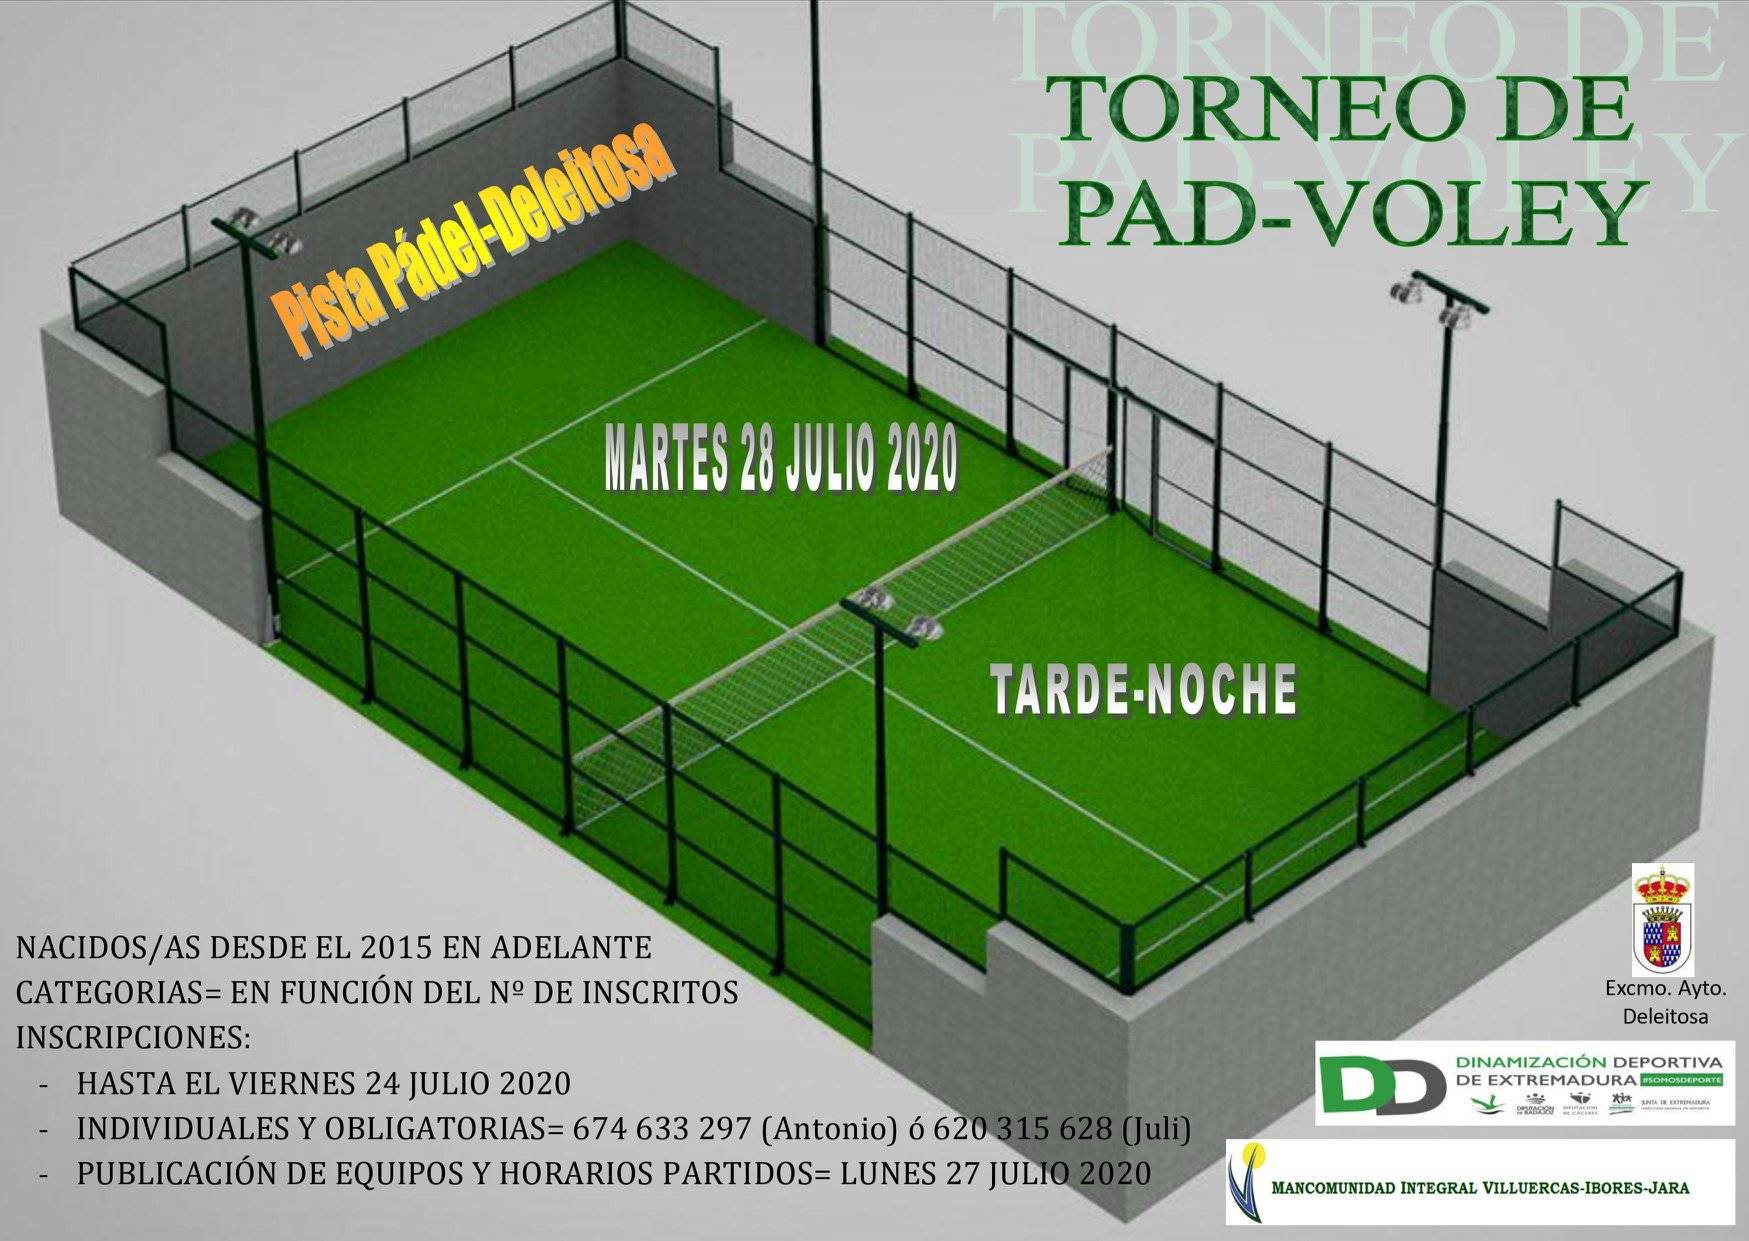 Torneo de pad-voley 2020 - Deleitosa (Cáceres)